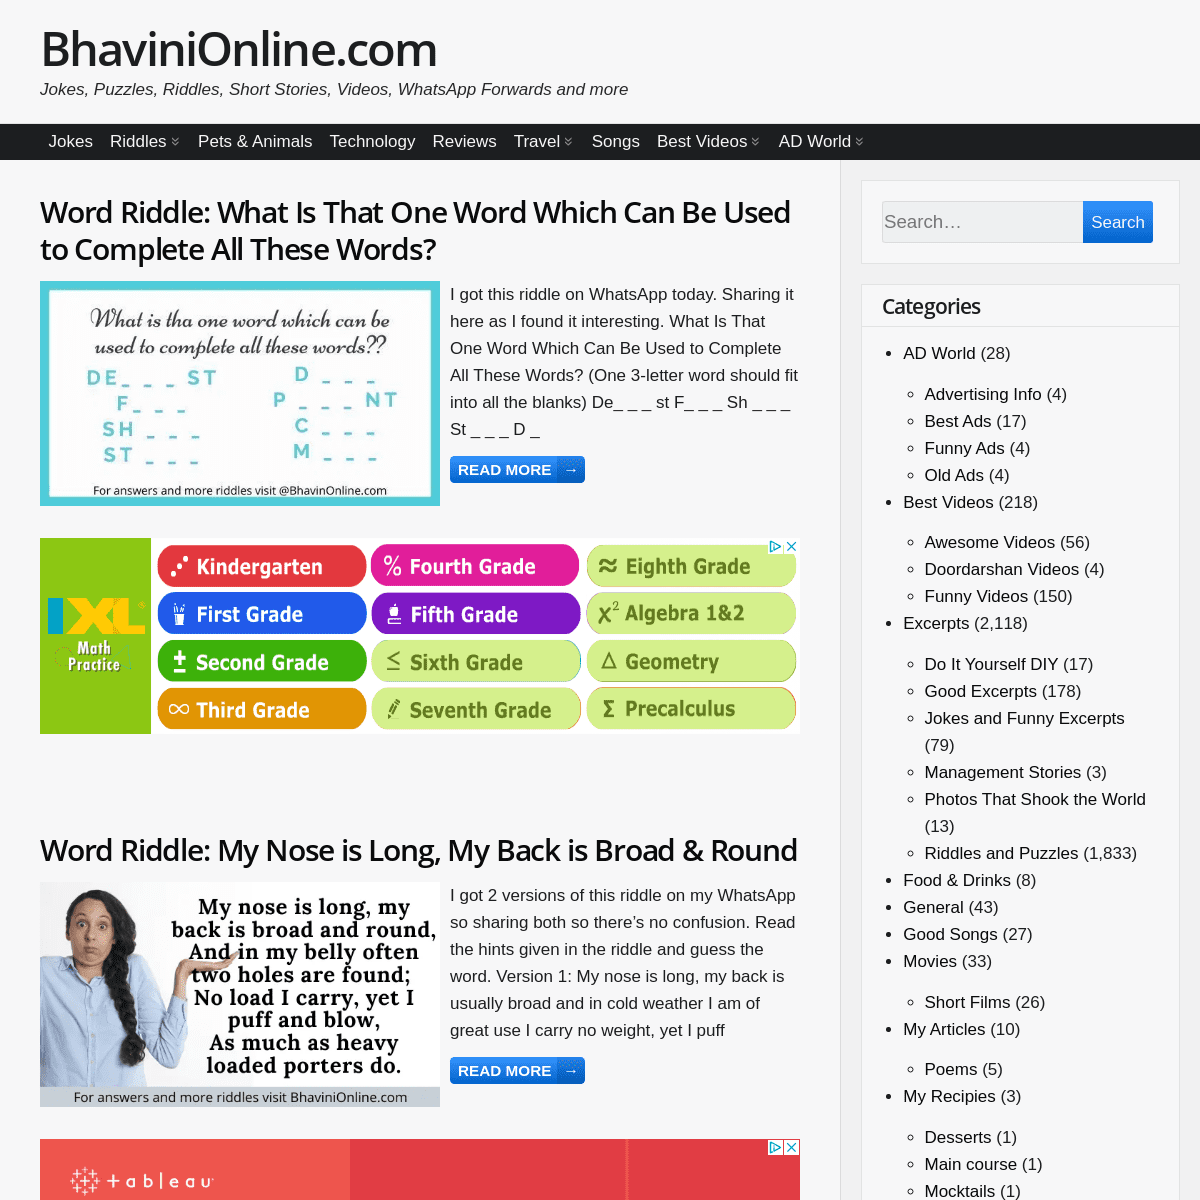 A complete backup of bhavinionline.com